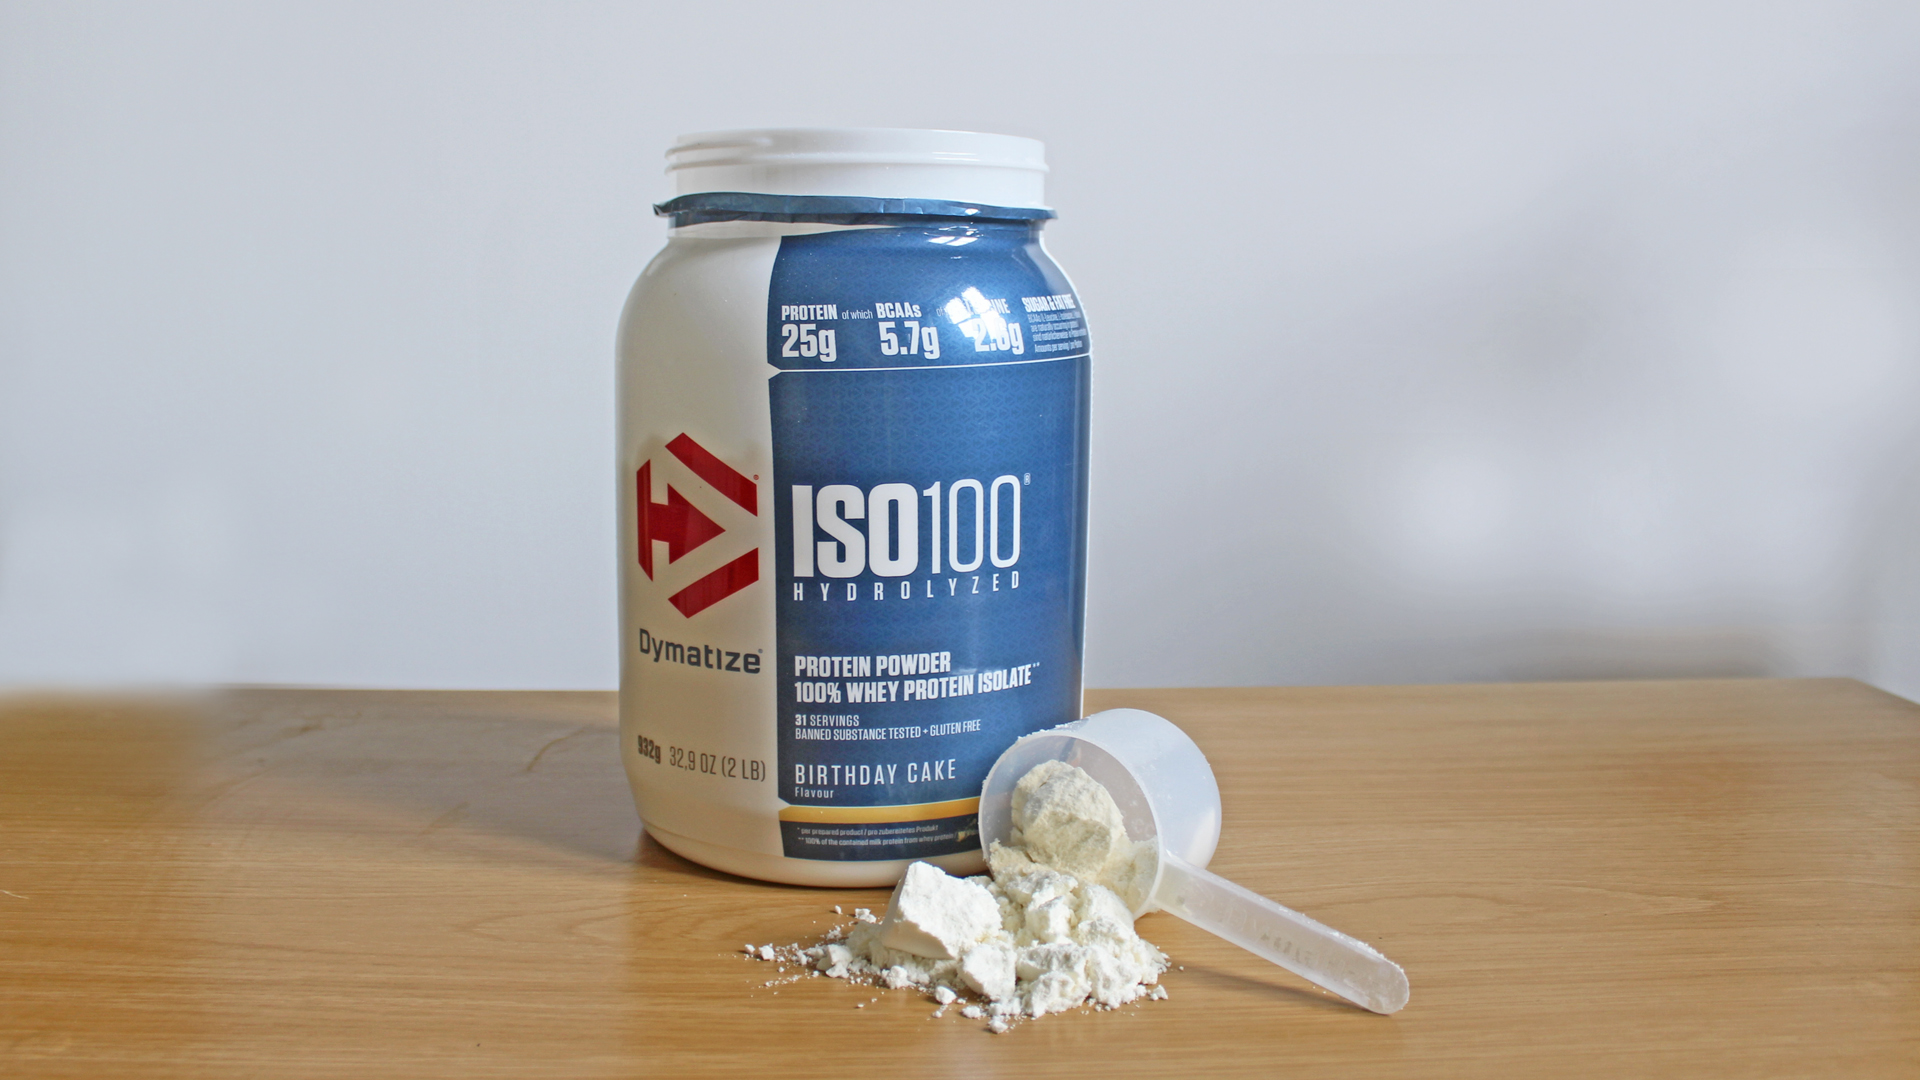 Dymatize Iso100 protein powder